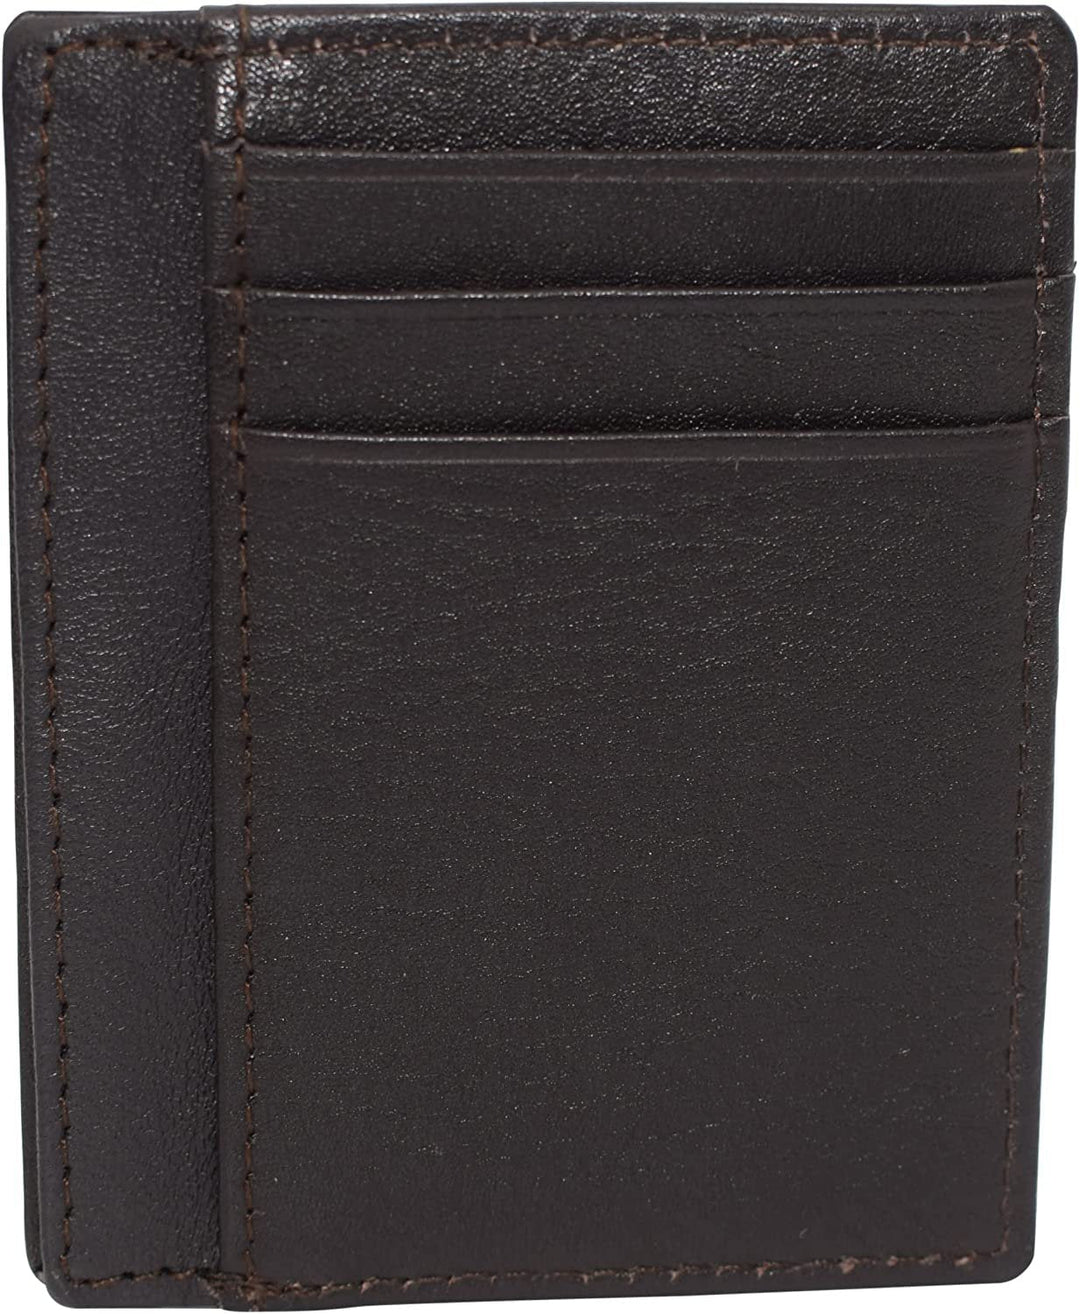 Swiss Marshall RFID Blocking Front Pocket Leather Slim Credit Card Case Holder Wallet Image 4